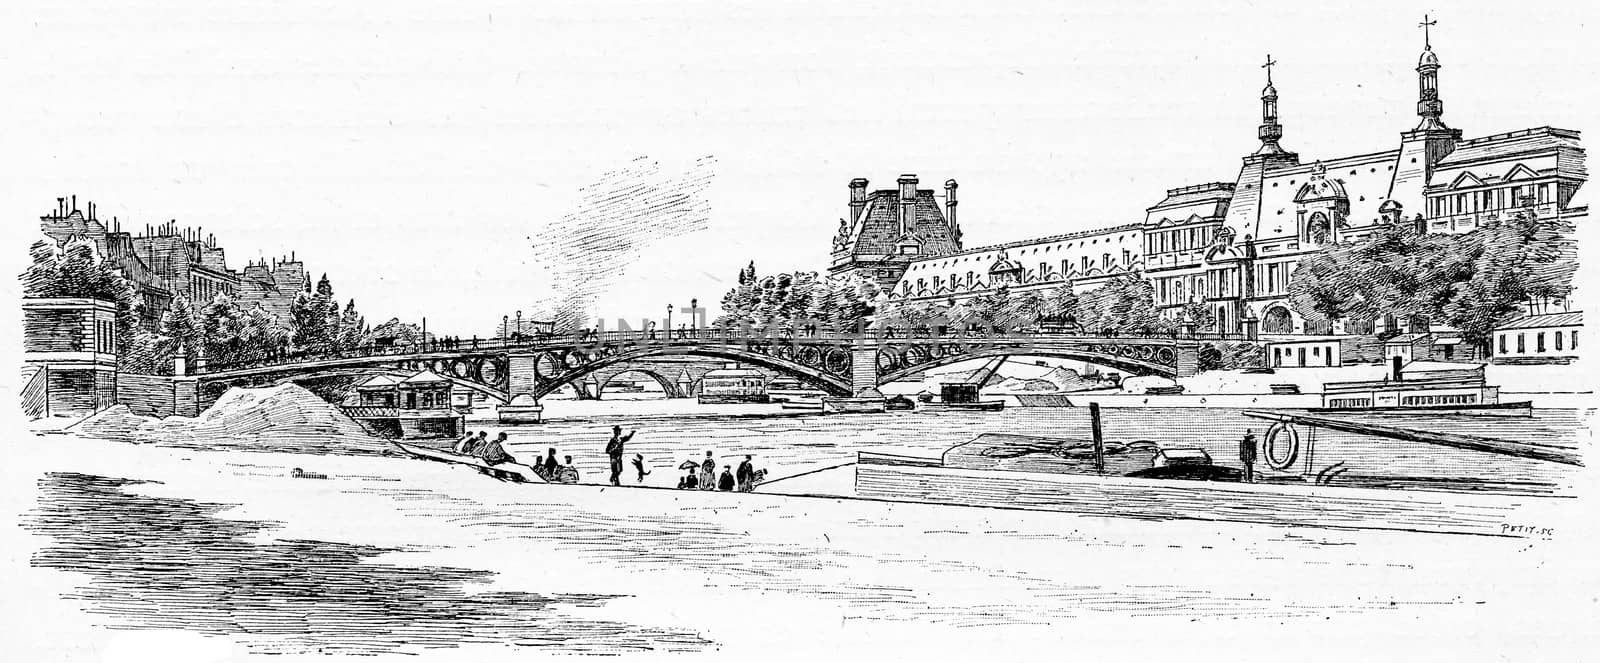 The Pont du Carrousel and the Louvre seen from the dock Malaquais, vintage engraved illustration. Paris - Auguste VITU – 1890.